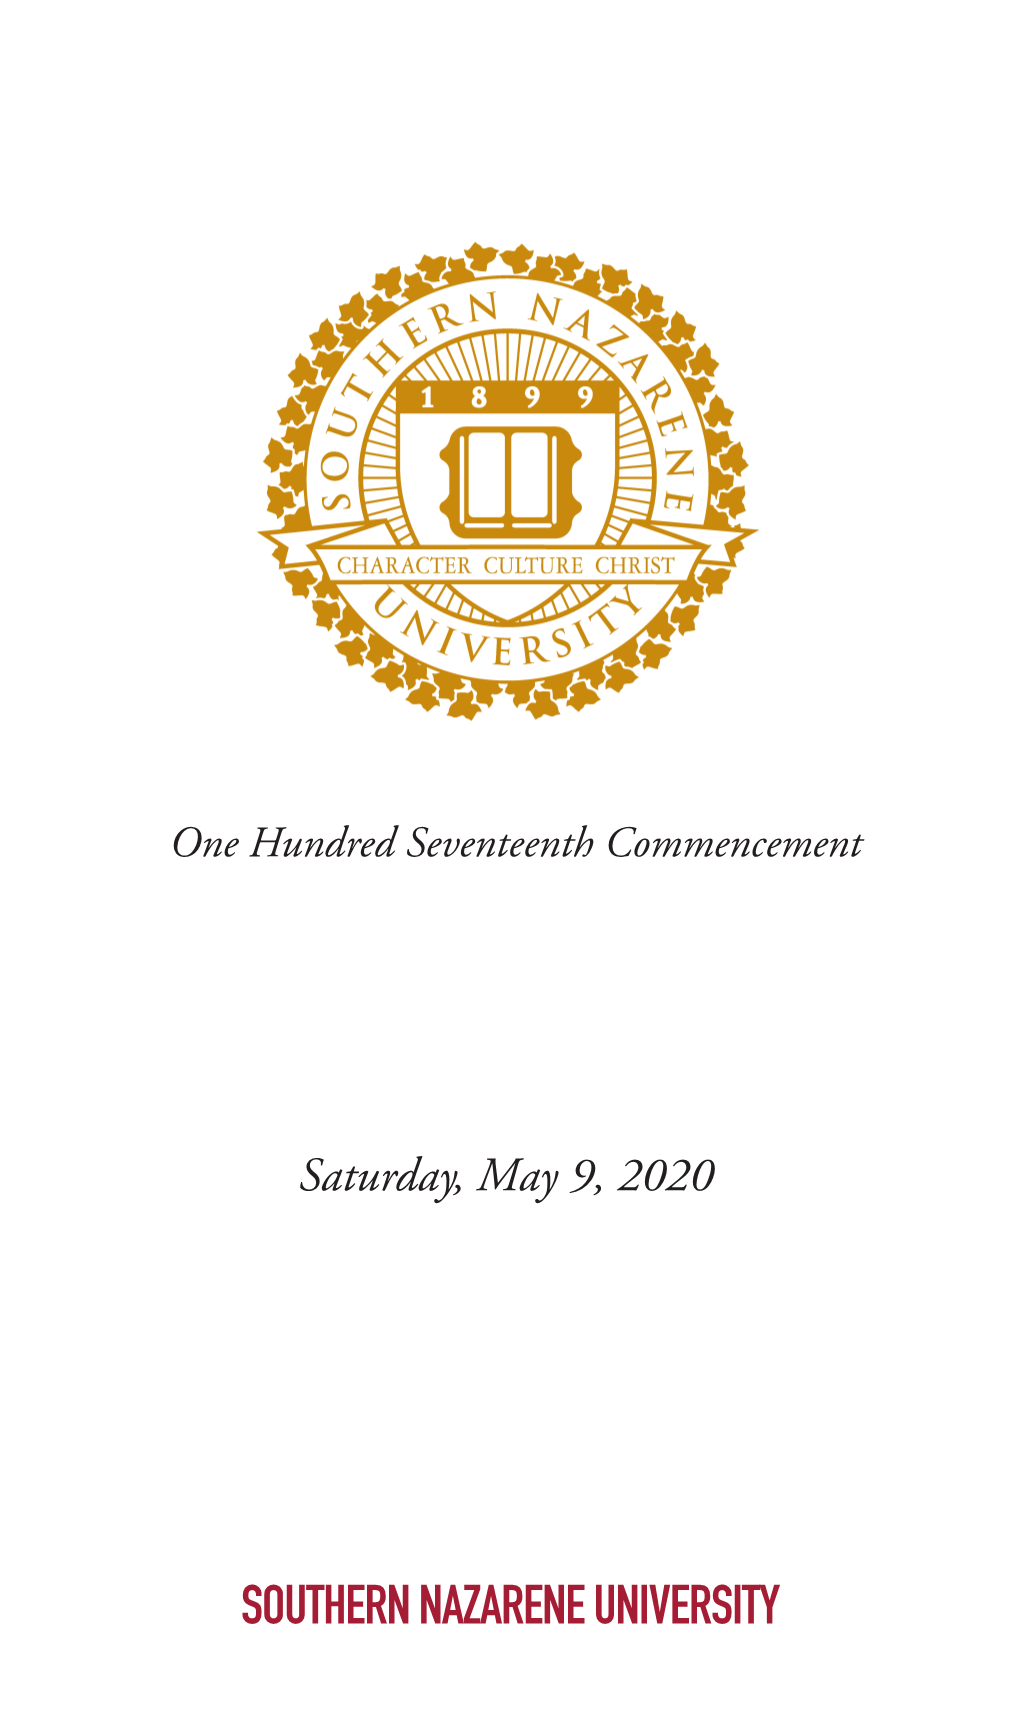 SOUTHERN NAZARENE UNIVERSITY SOUTHERN NAZARENE UNIVERSITY One Hundred Seventeenth Commencement Saturday, May 9, 2020